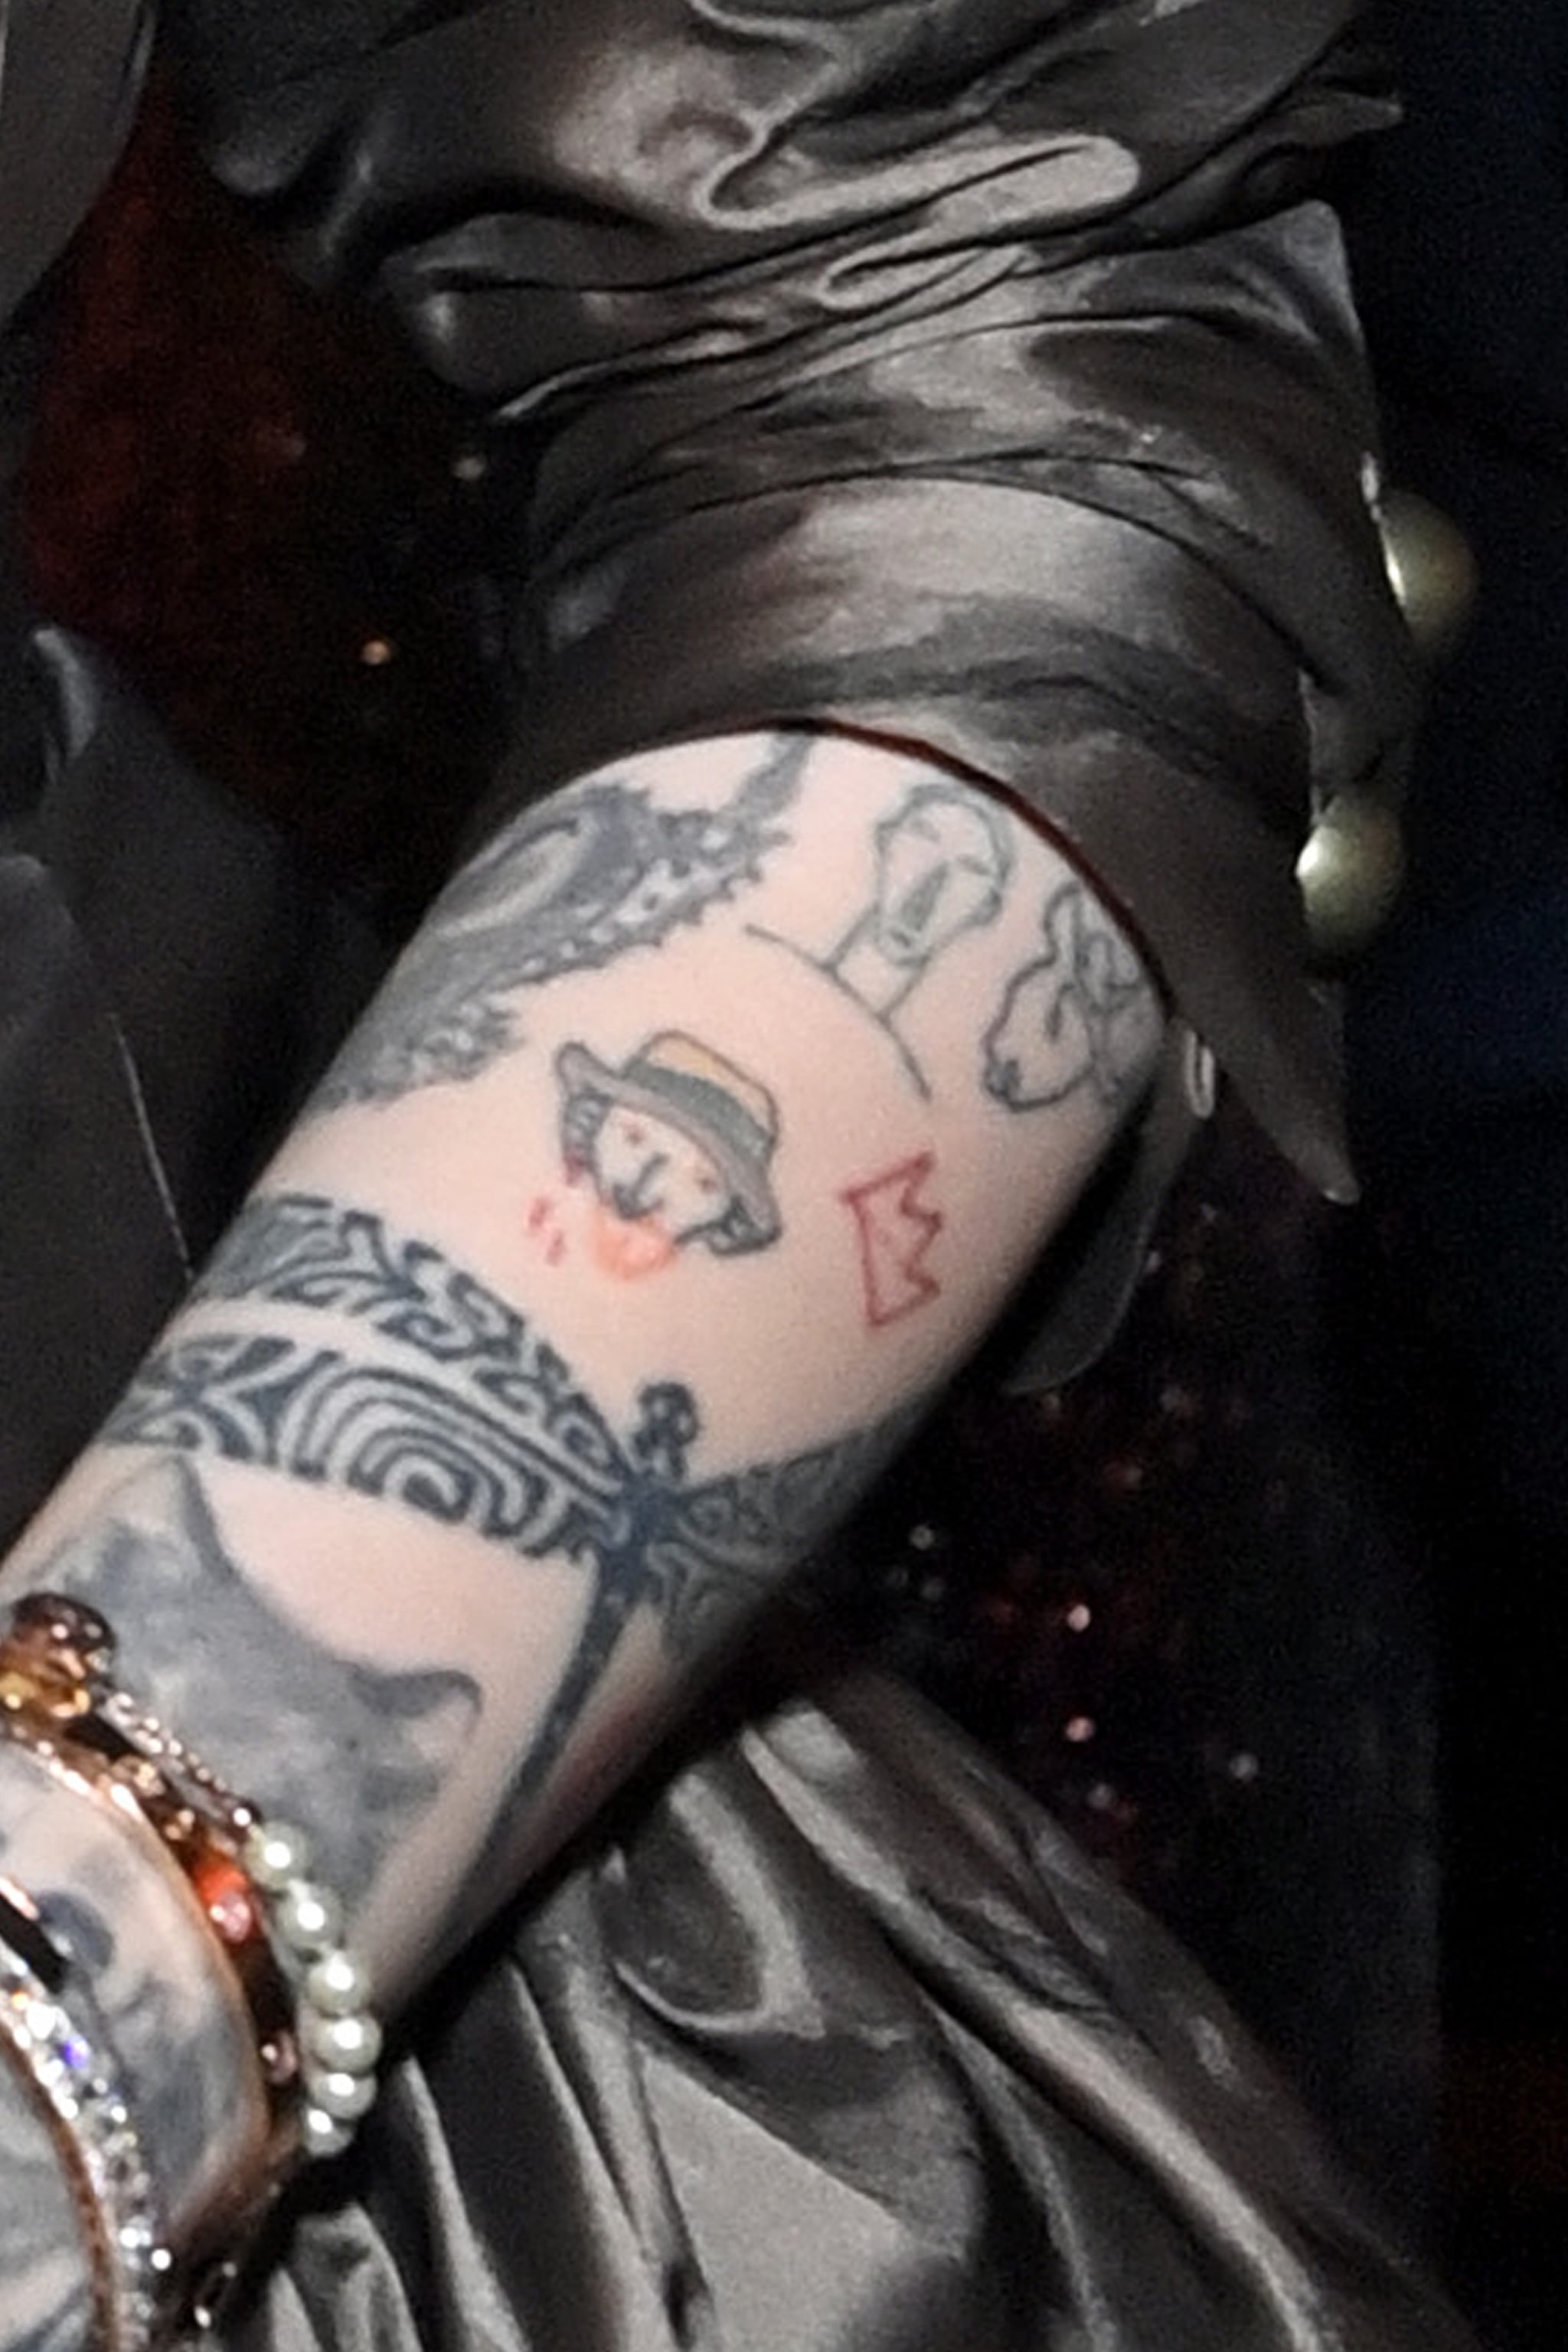 Tattoo uploaded by Tattoodo • Arm band tattoo by Neeno #Neeno #armband  #armbandtattoo #band #bracelet #bands #arm #blackwork #sacredgeometry  #geometric #pattern #blackfill #arm • Tattoodo